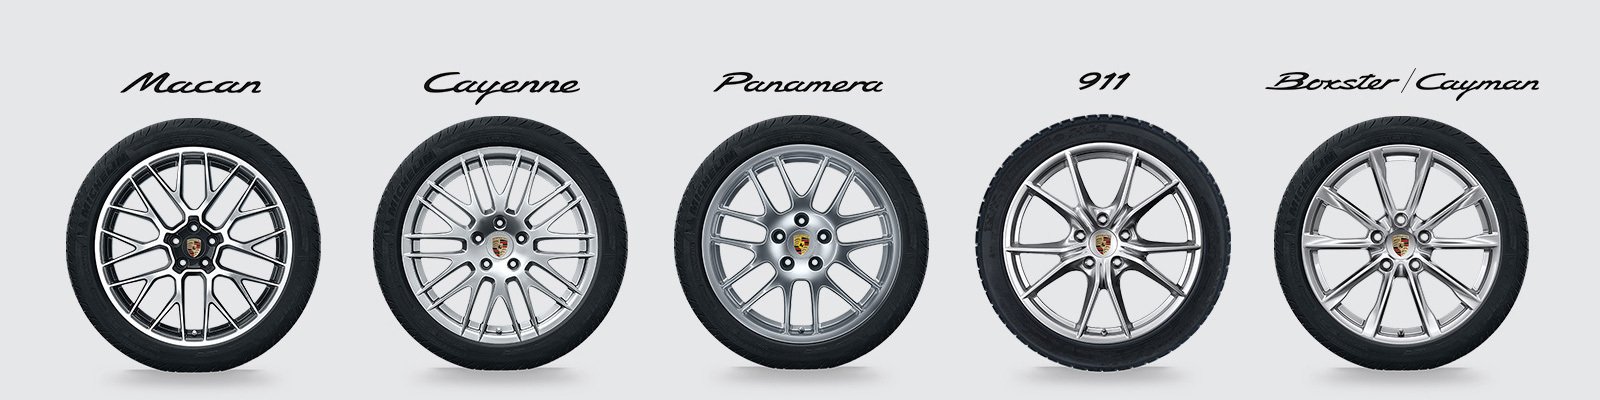 Porsche-centre-wheels